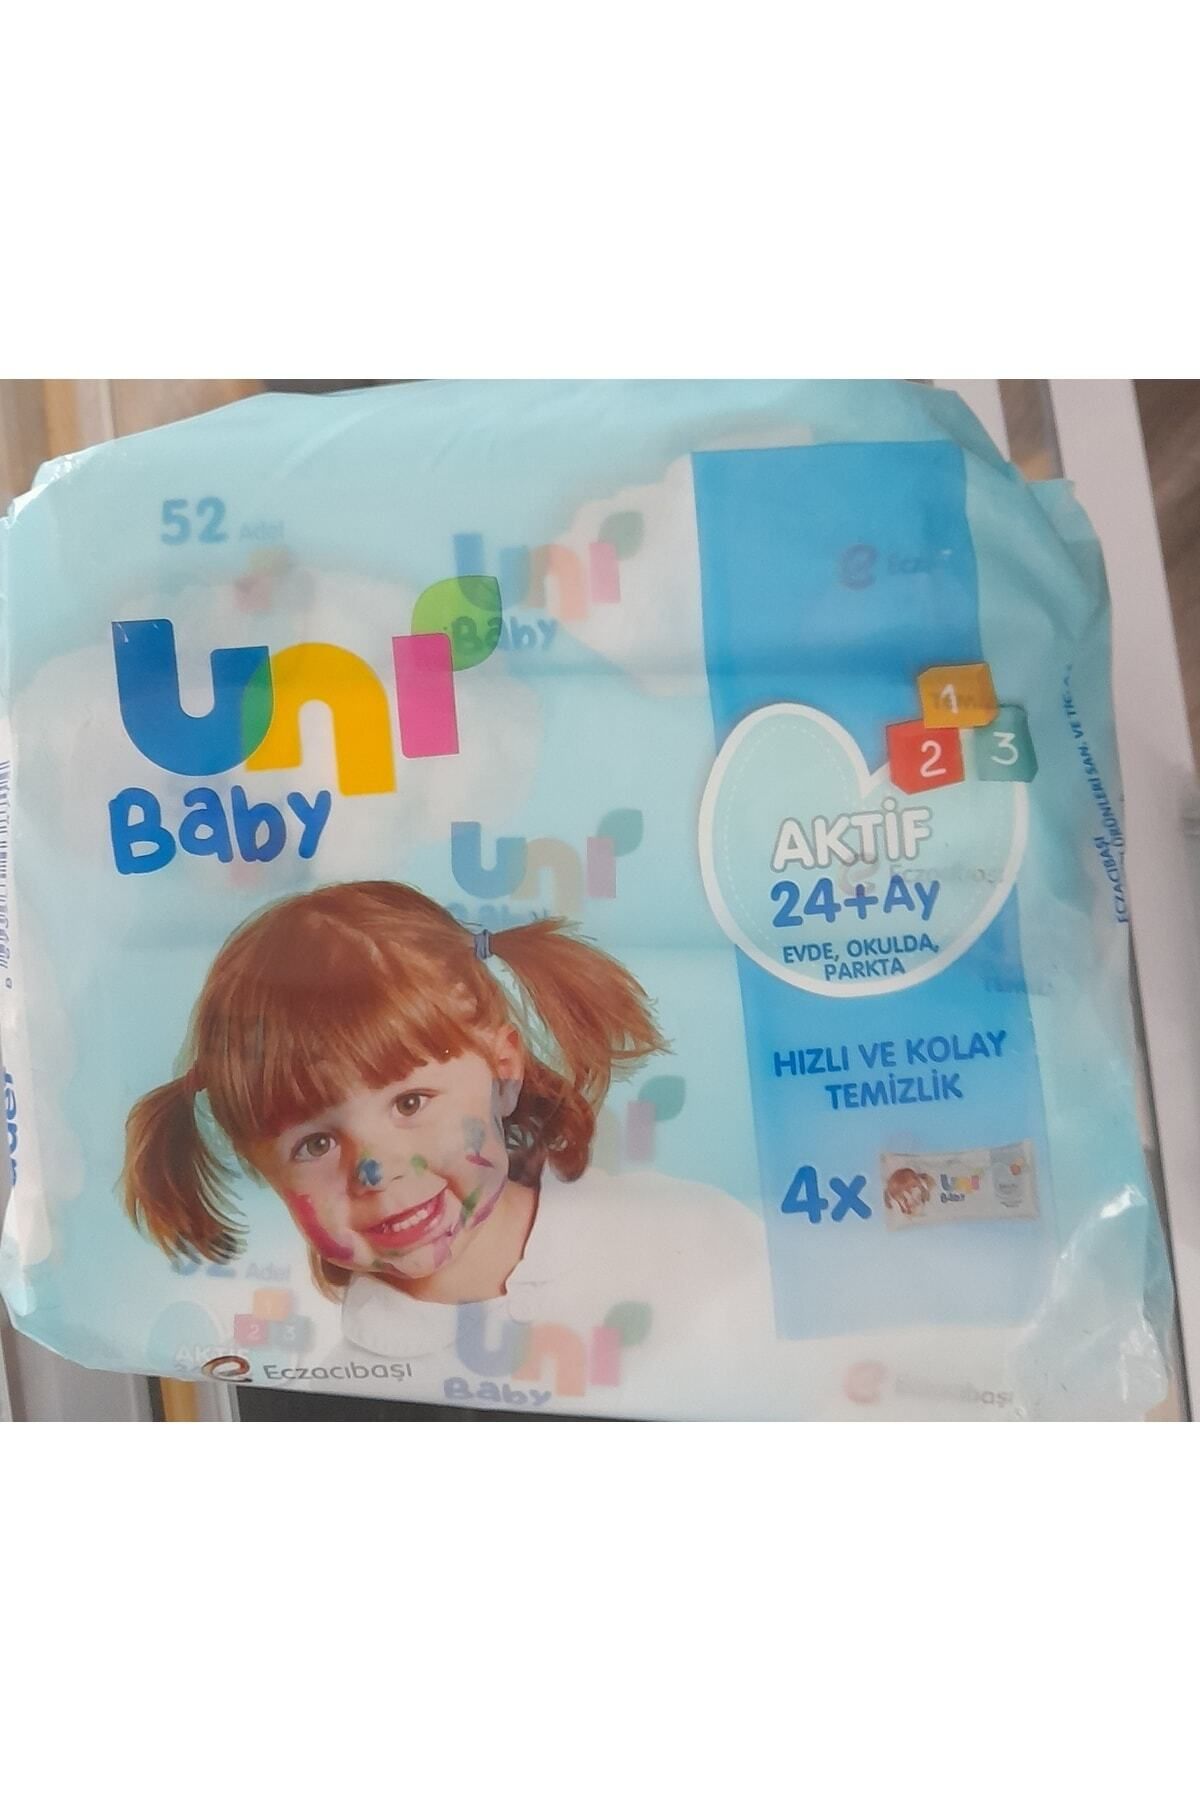 Uni Baby Mendil Islak Baby 4x52 (1 ADET)